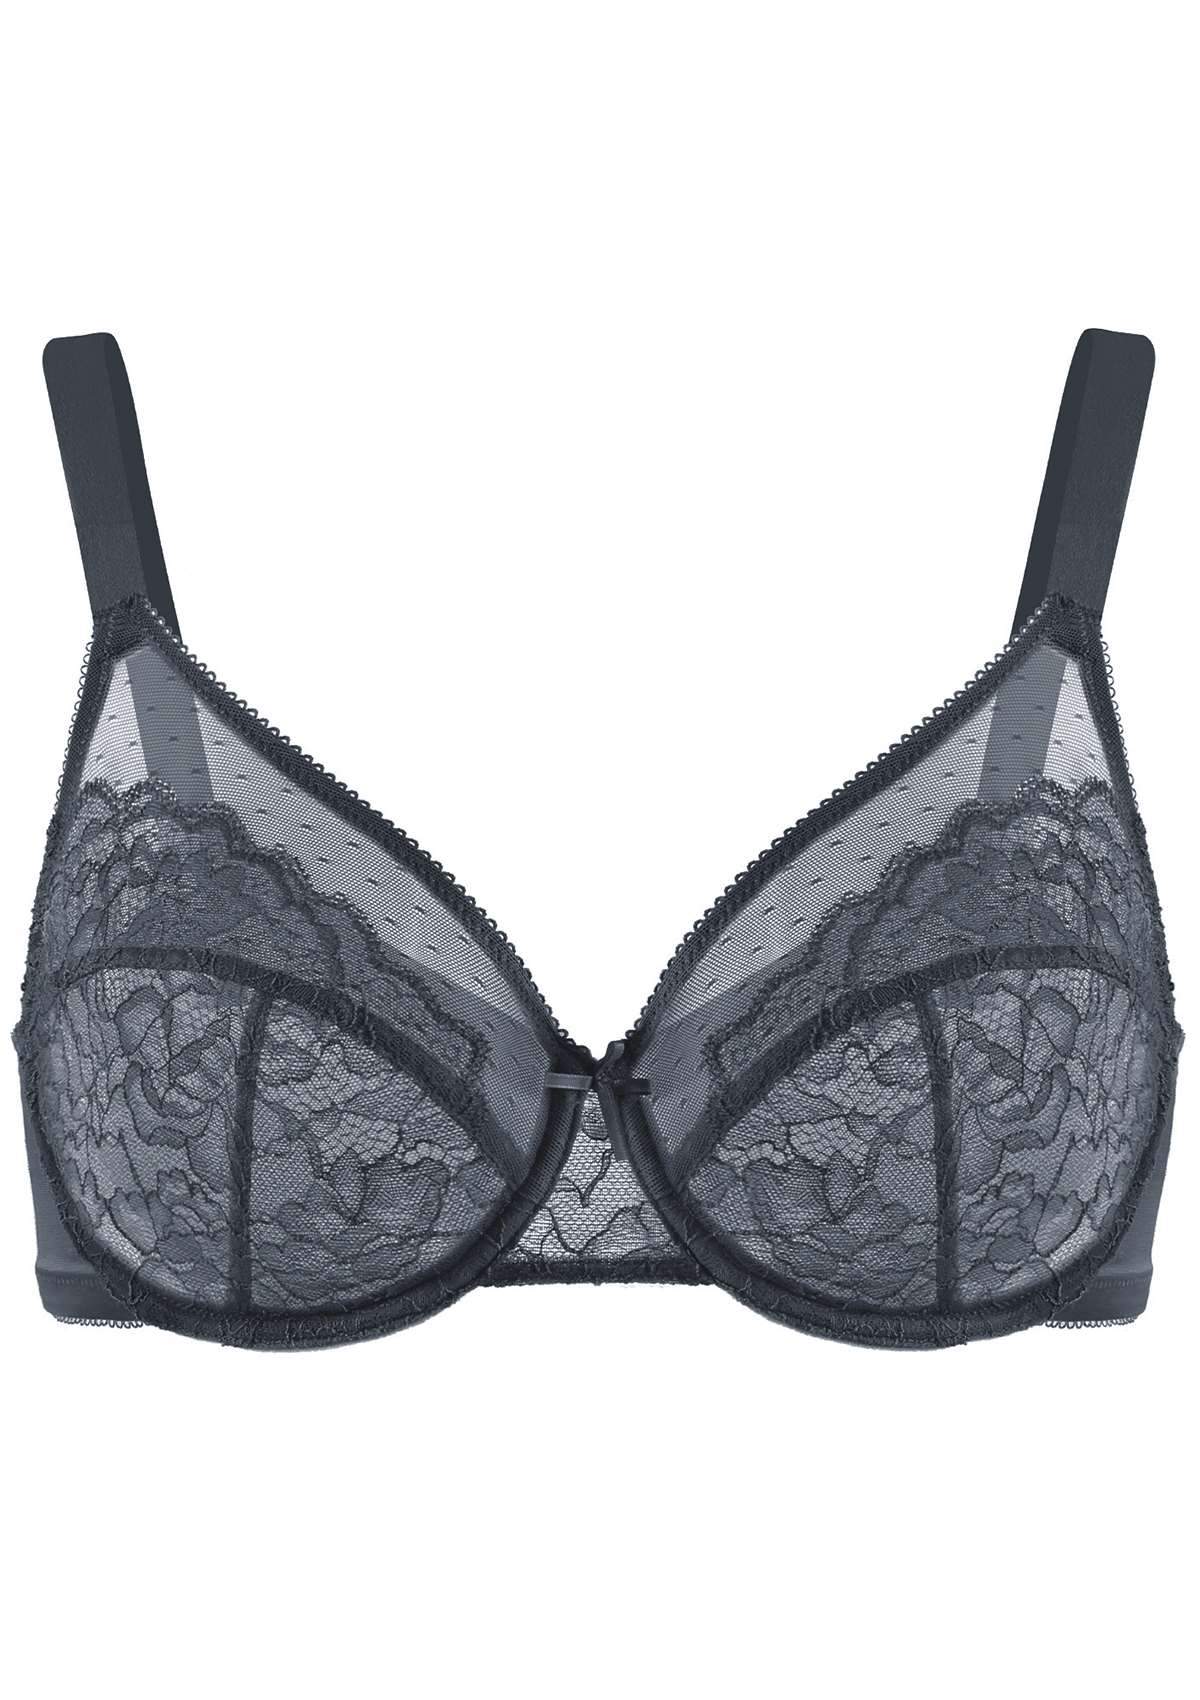 HSIA Enchante Matching Bra And Underwear Sets: Uplift Big Boobs Bra - Dark Gray / 42 / C